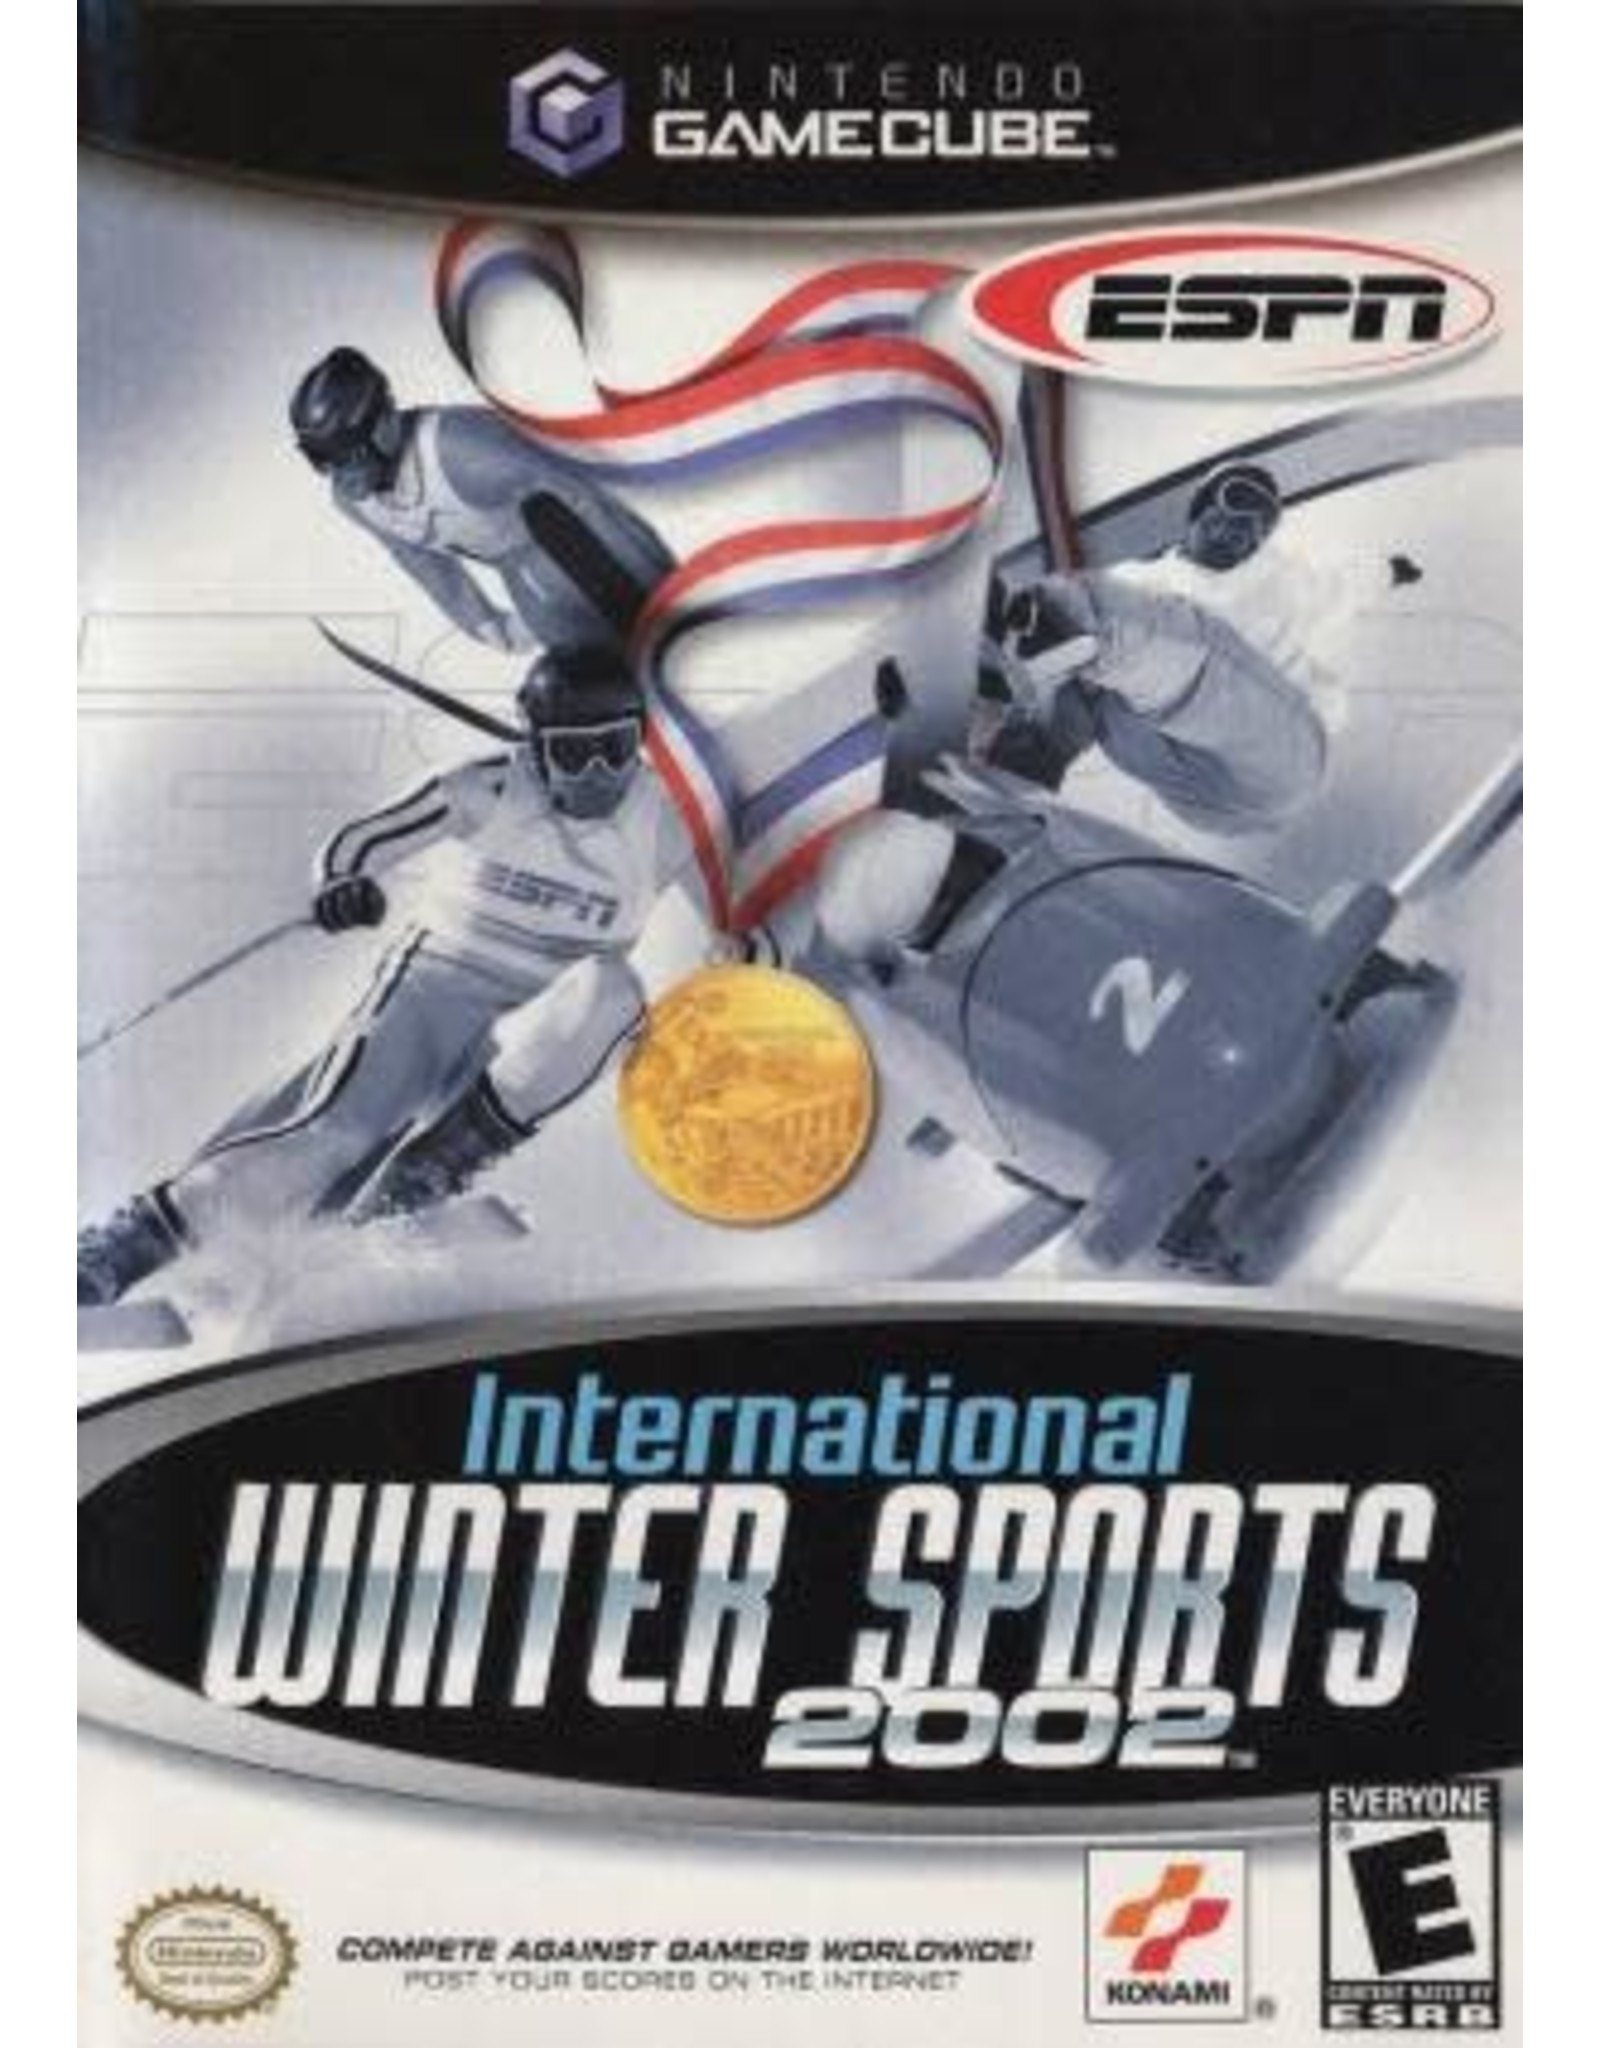 Gamecube ESPN Winter Sports 2002 (CiB)